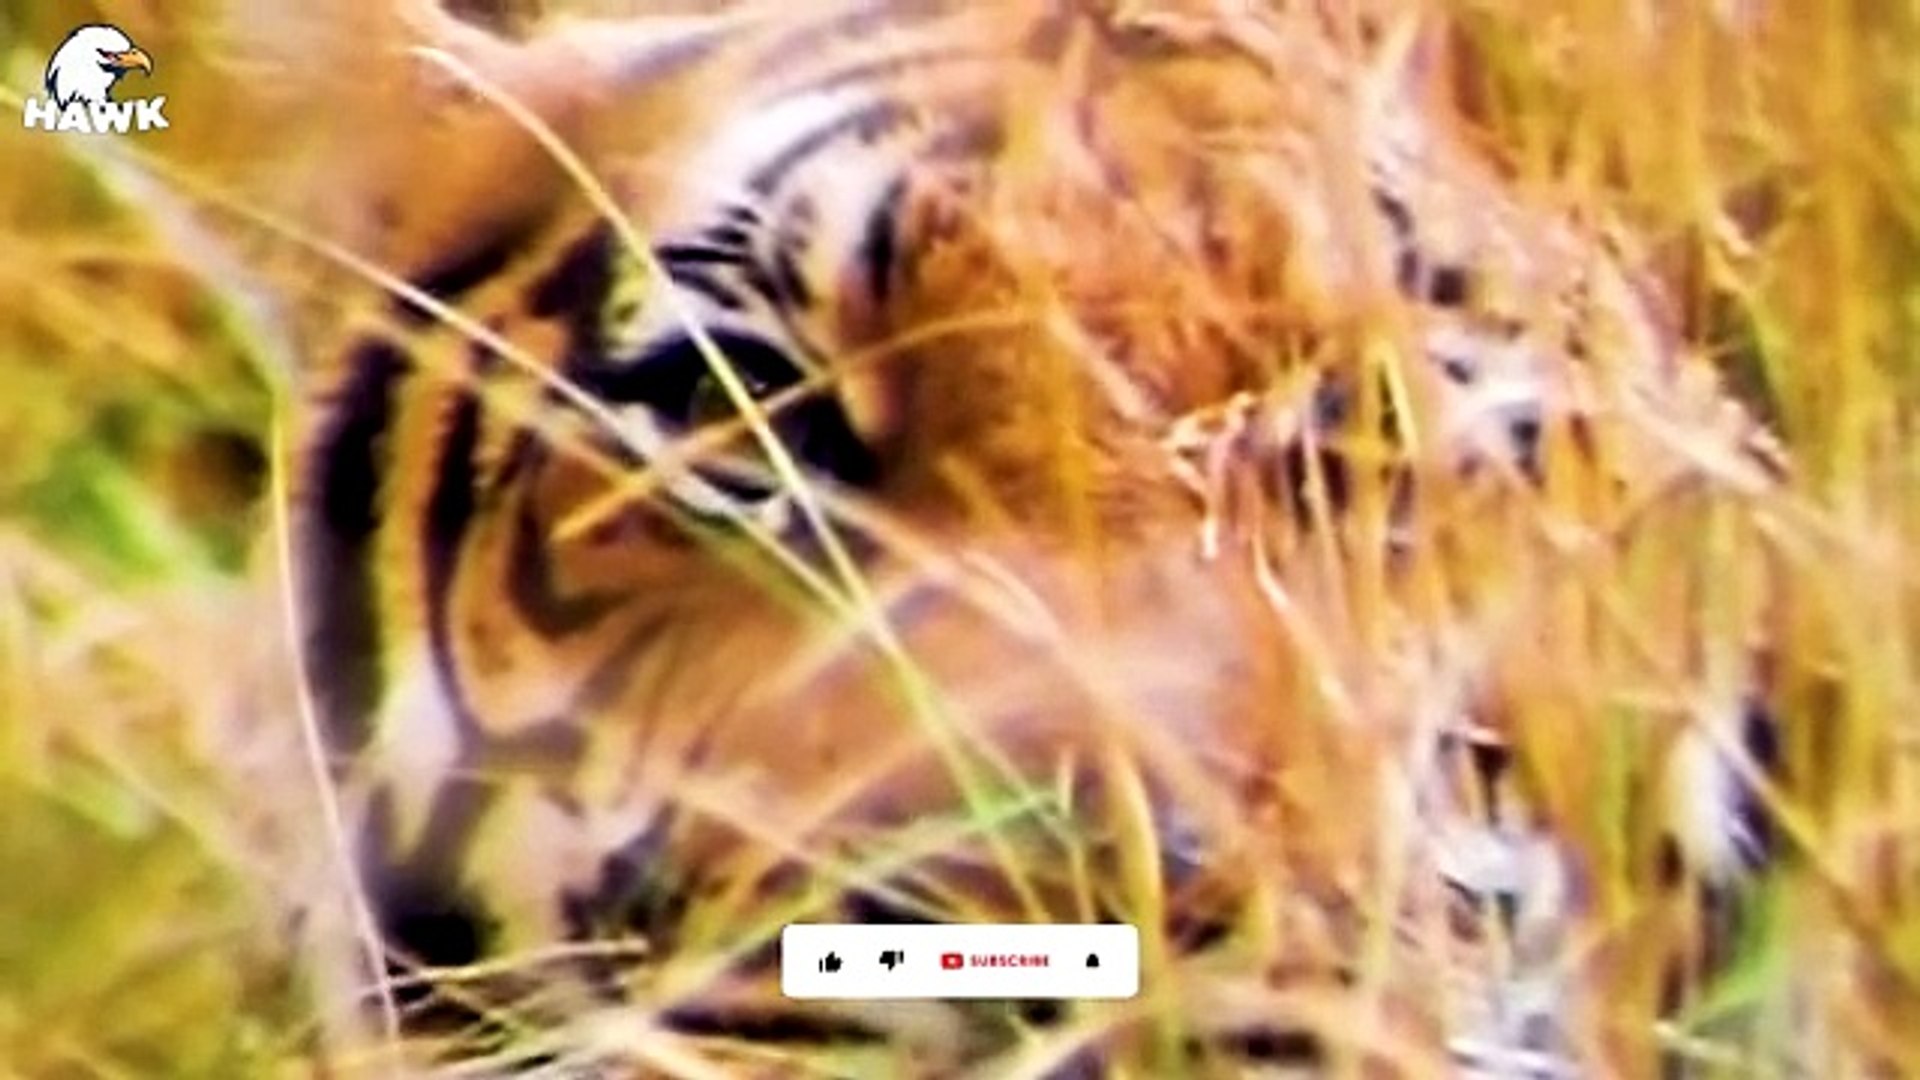 Bengal Tiger - video Dailymotion